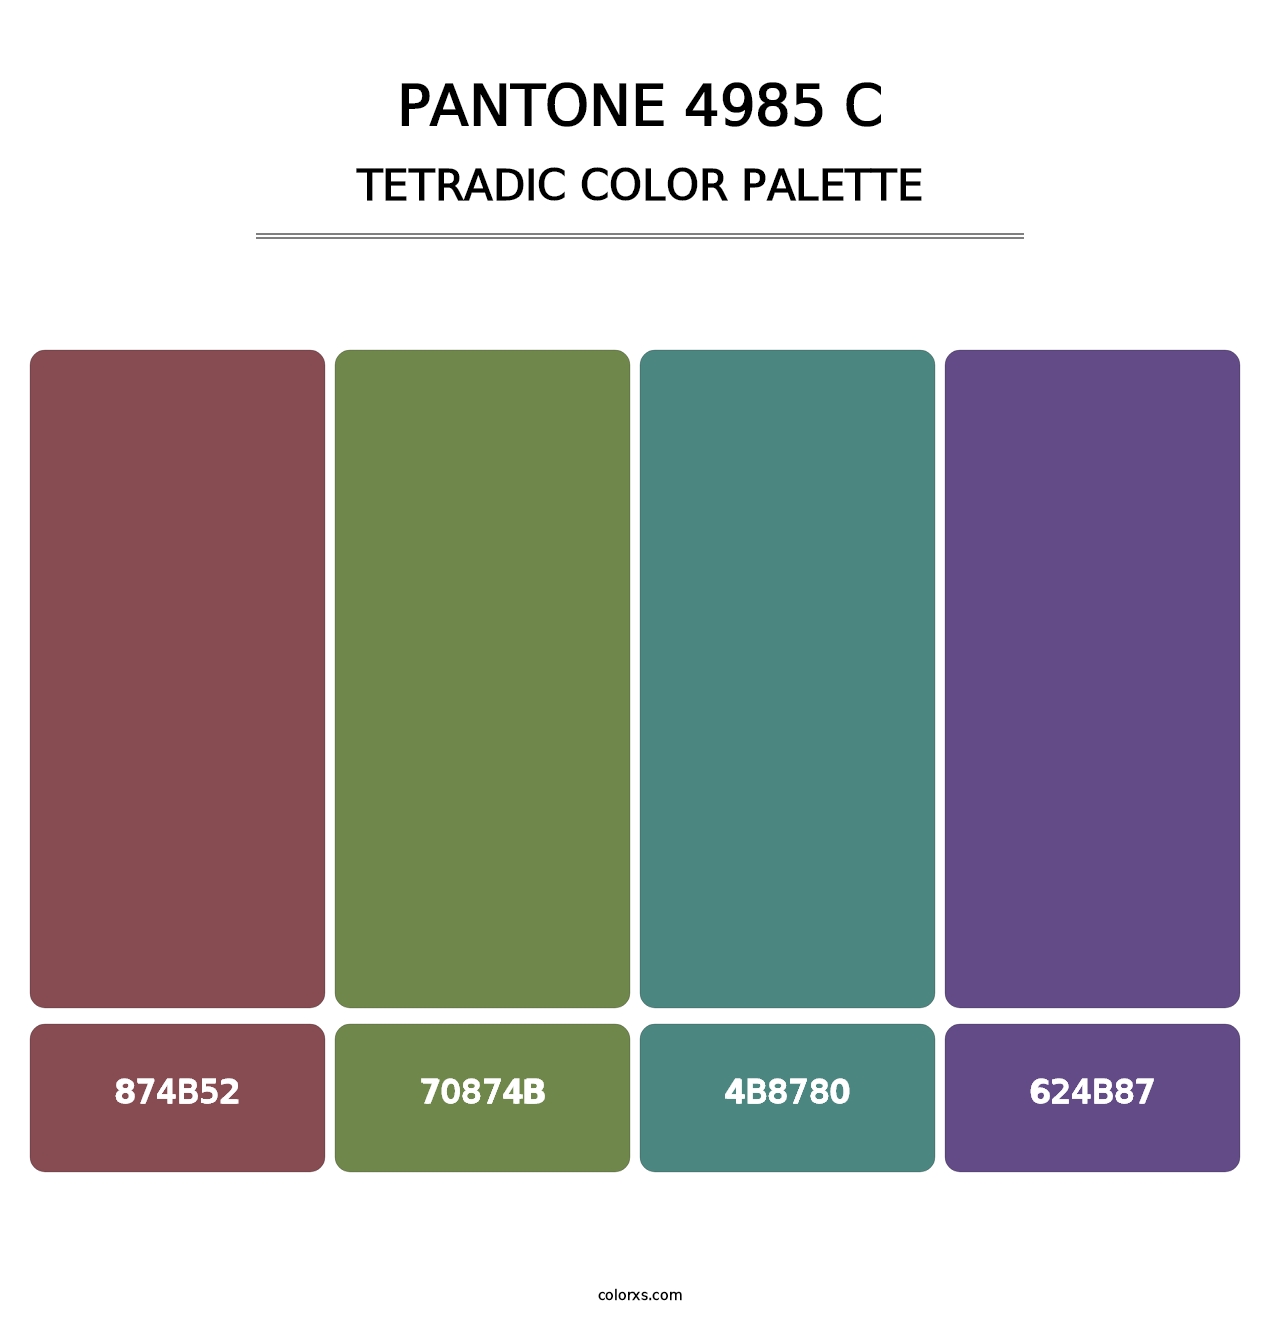 PANTONE 4985 C - Tetradic Color Palette